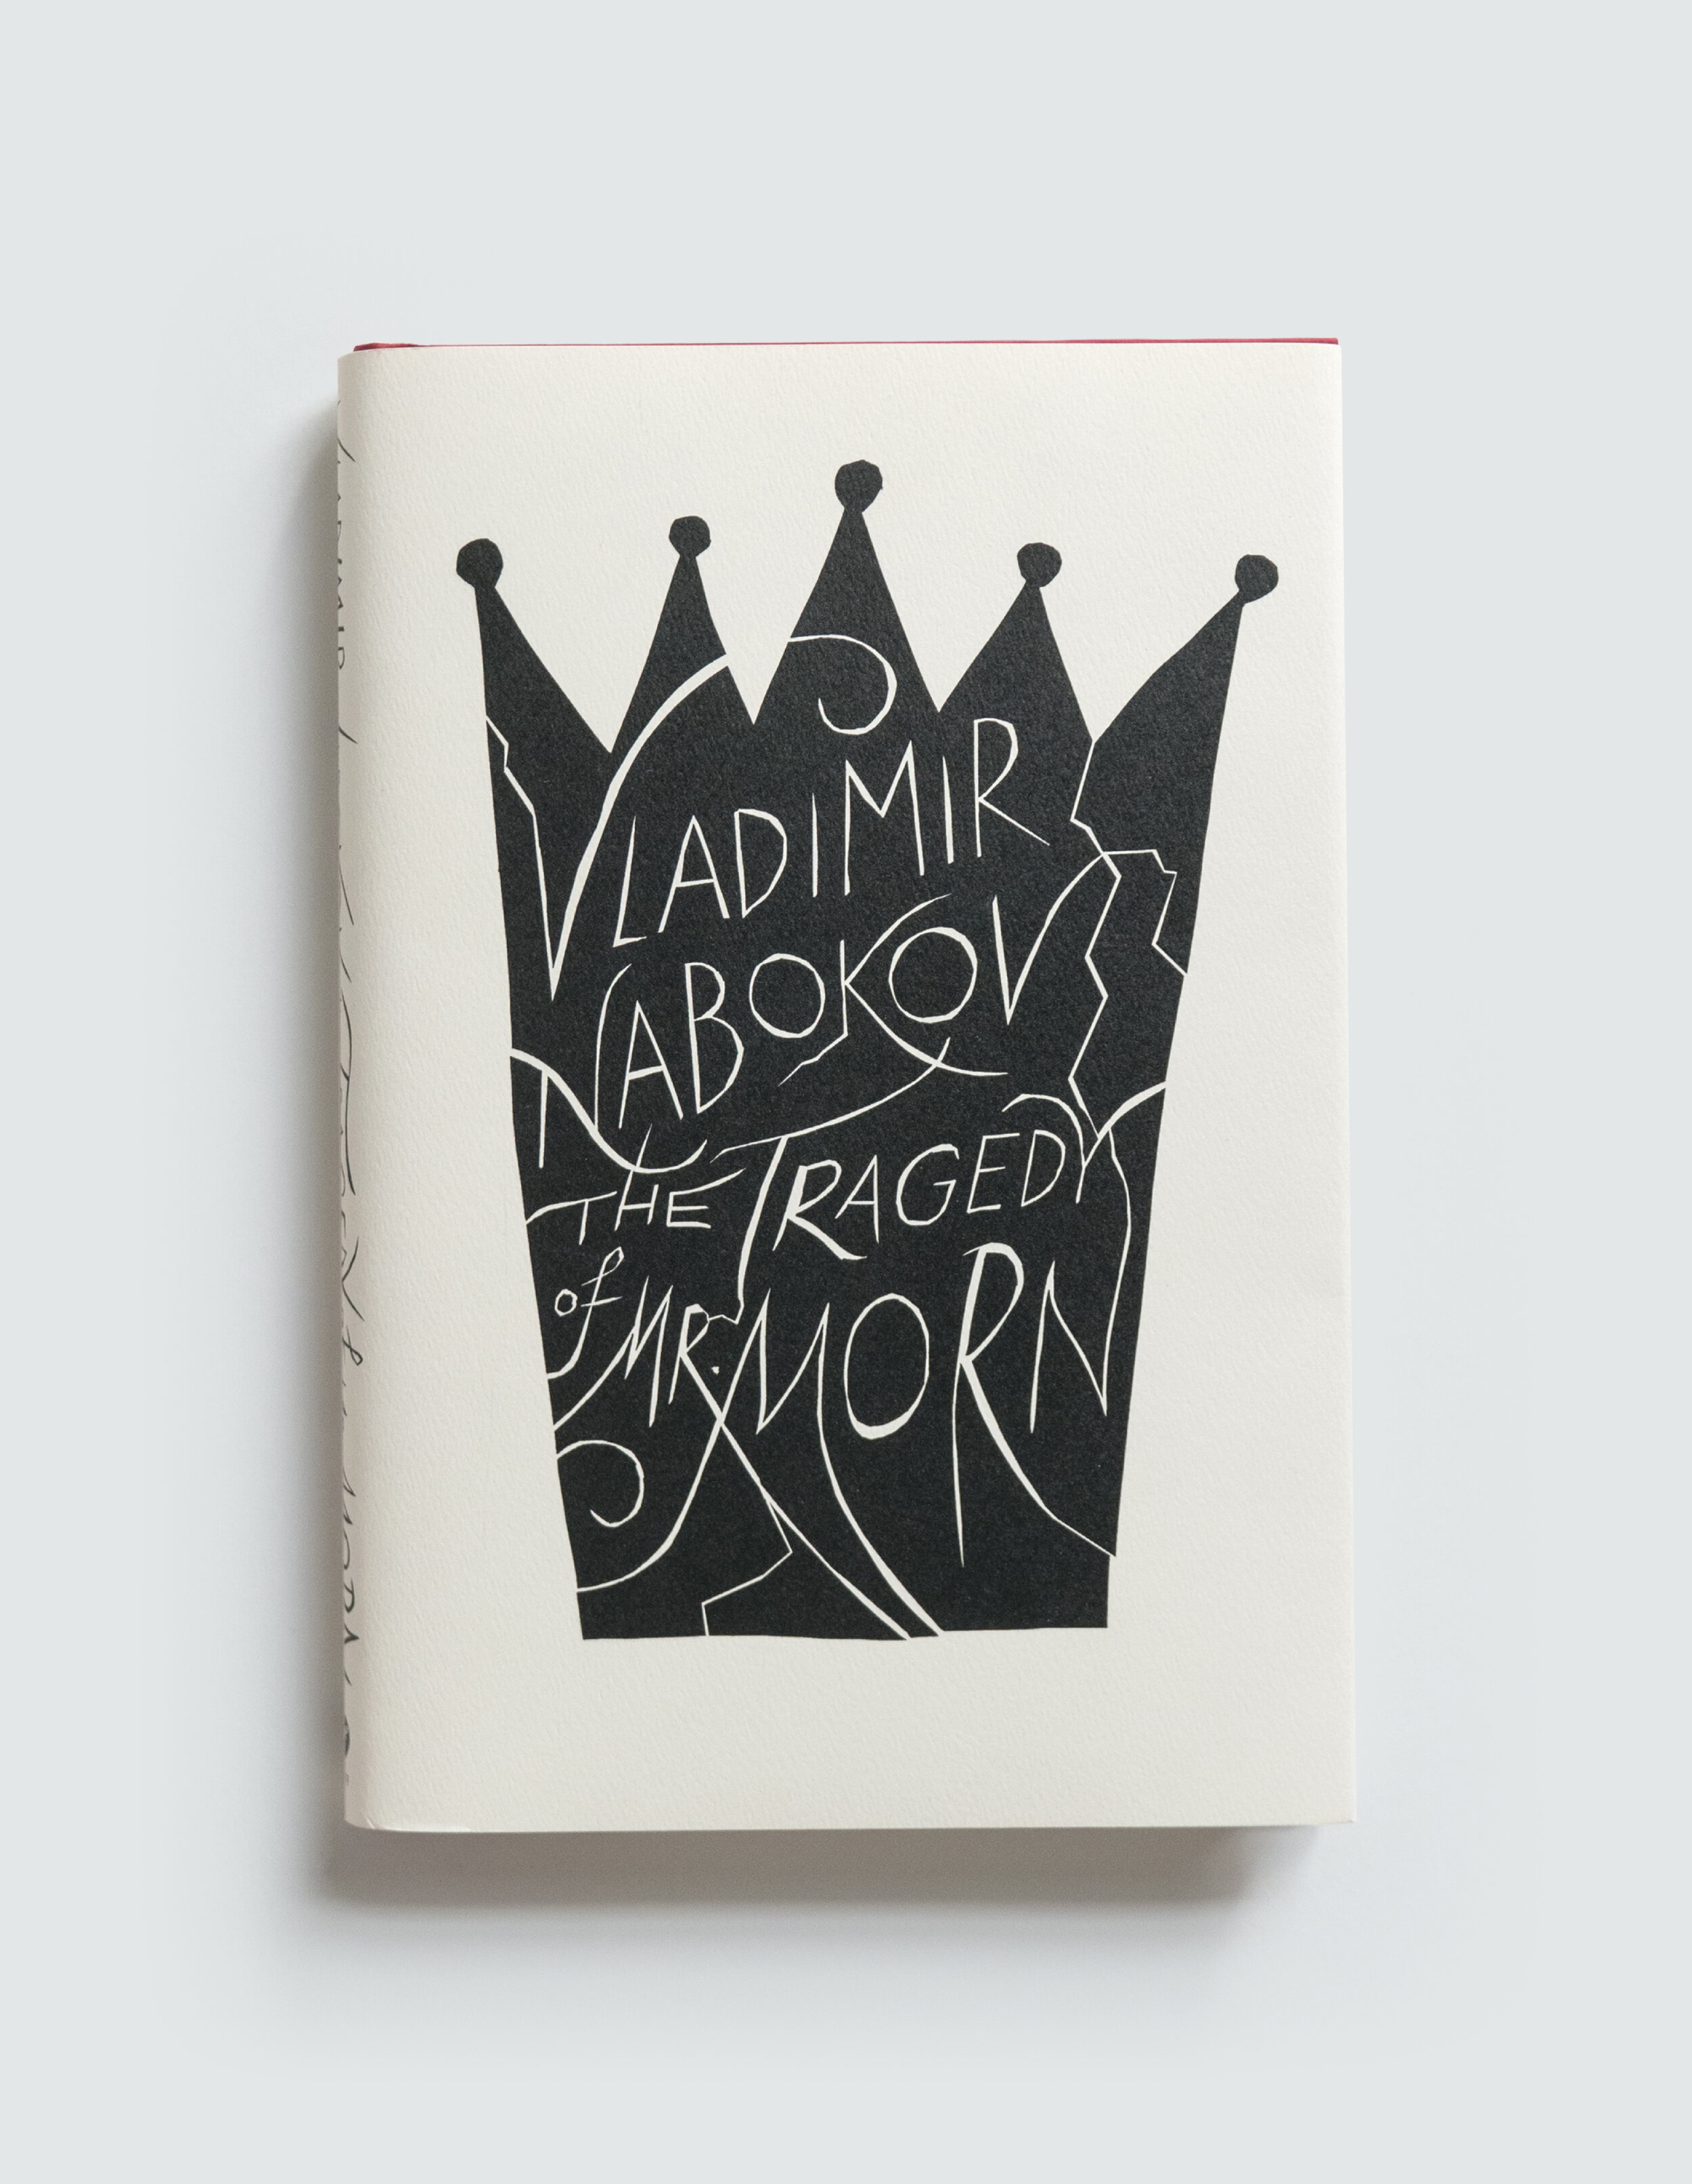 VLADIMIR NABOKOV. KNOPF BOOKS, 2013.